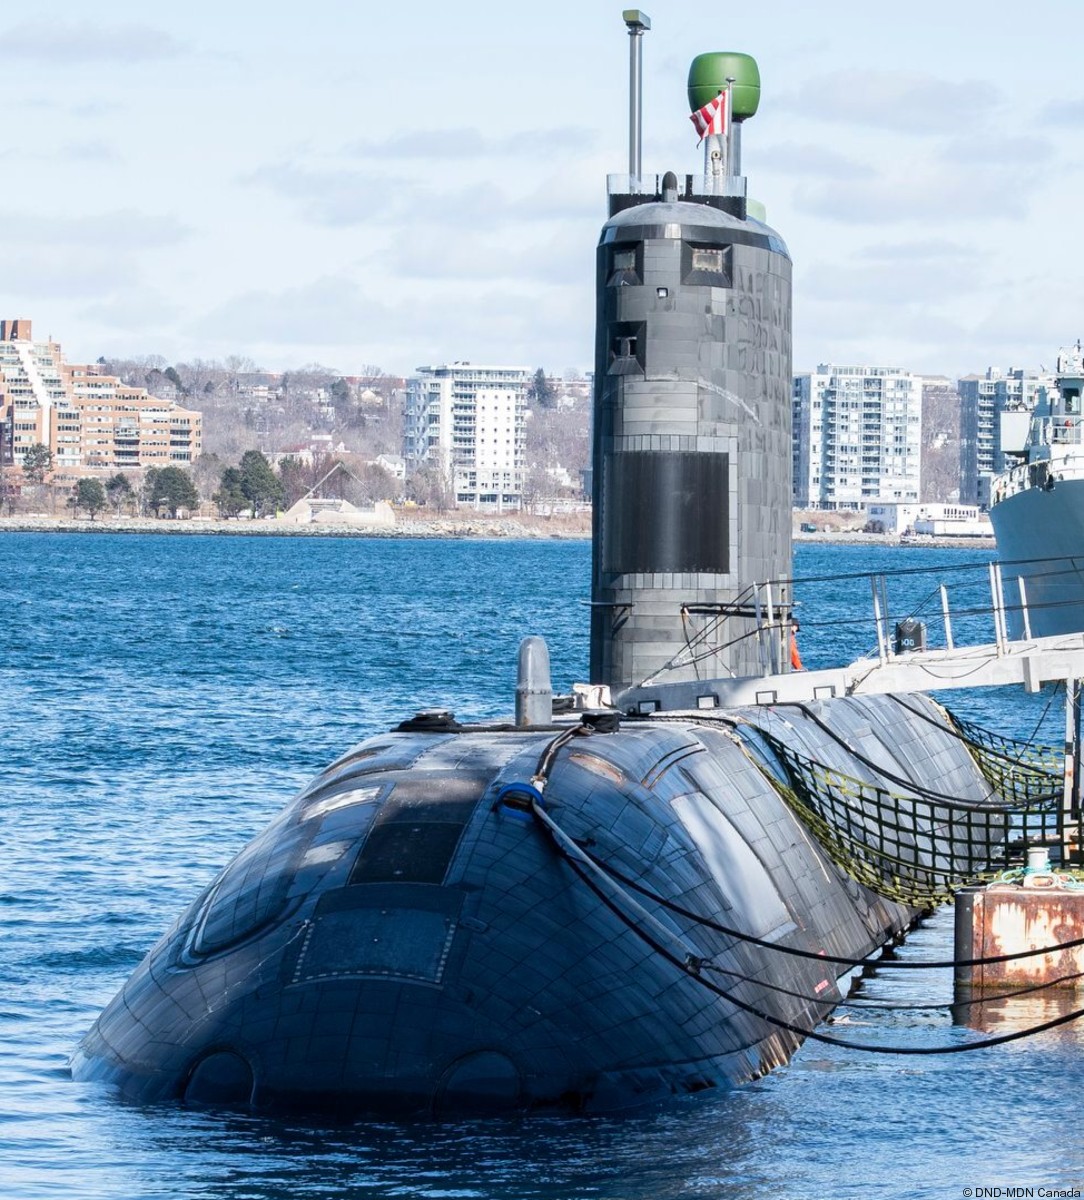 victoria class patrol submarine ssk hunter killer upholder royal canadian navy hmcs ncsm 03c